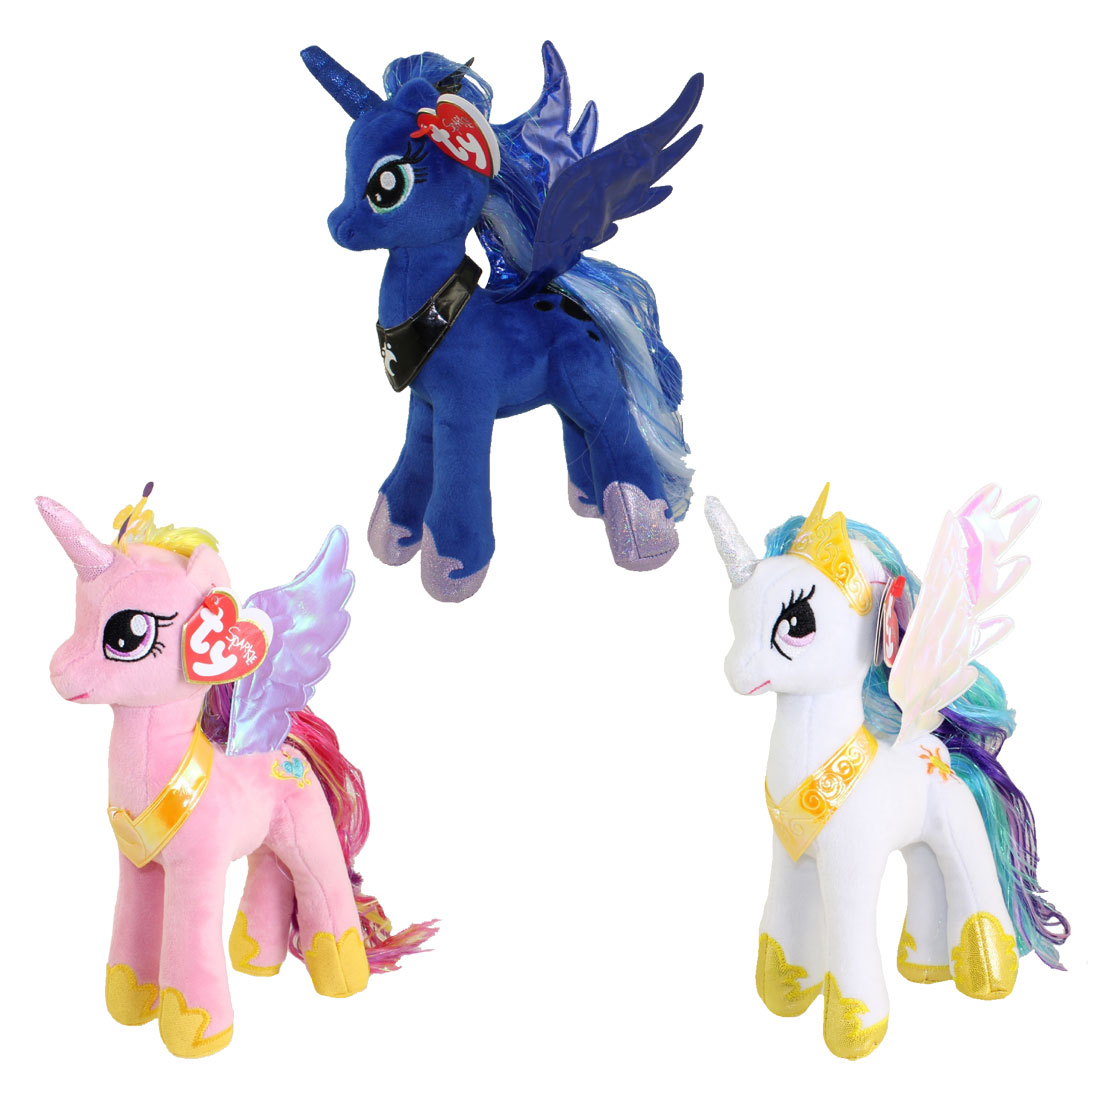 TY Beanie Babies - My Little Pony- SET of 3 PRINCESS (Cadance, Luna & Celestia)